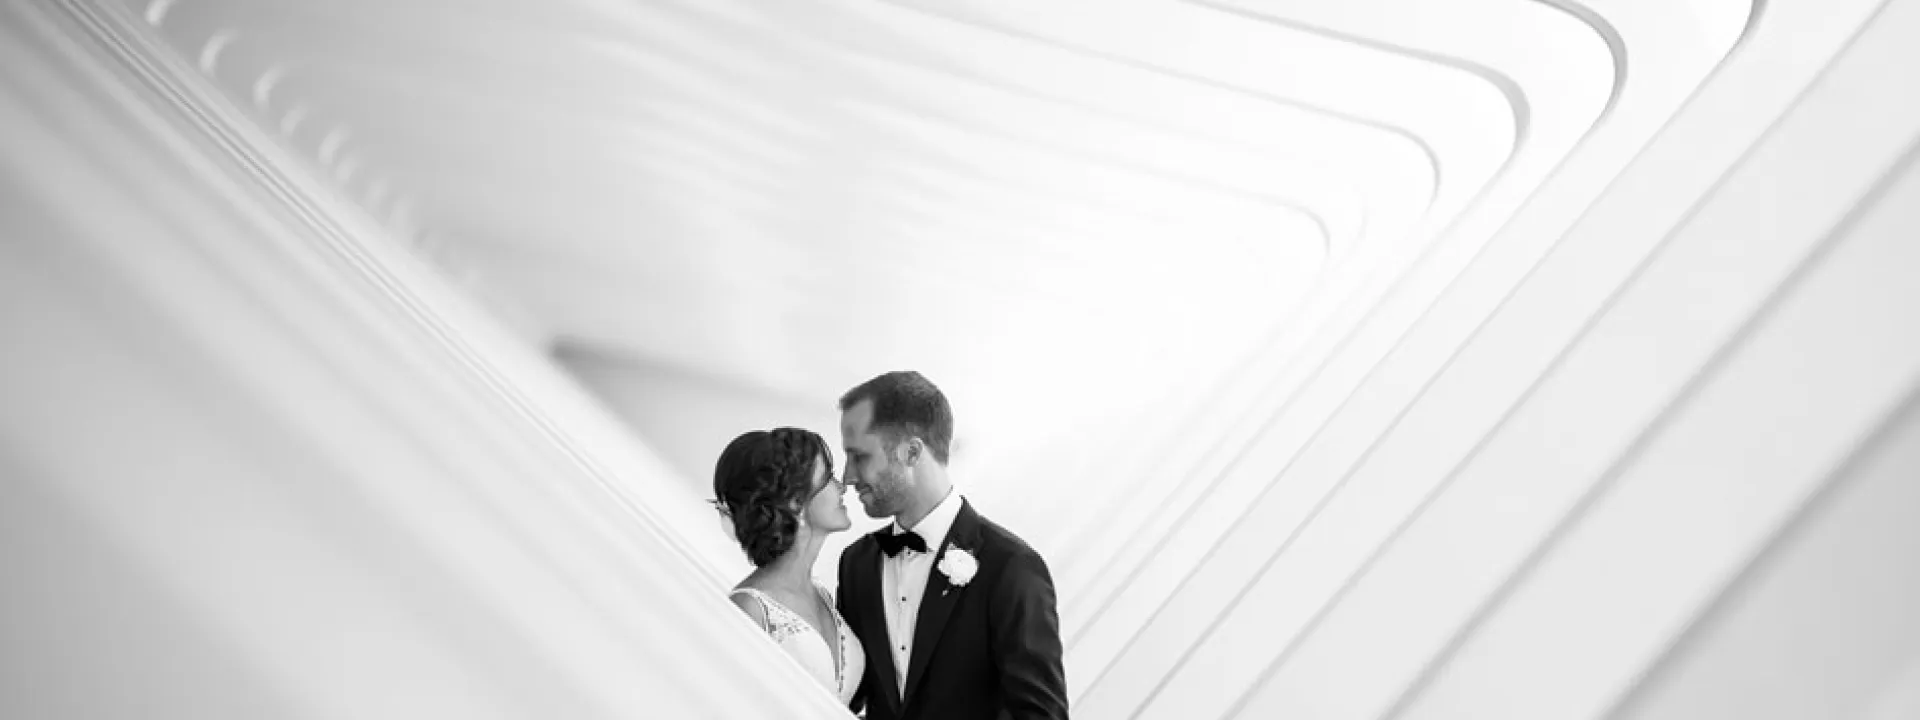 Kellen and Matt Bartel on their wedding day at the Milwaukee Art Museum